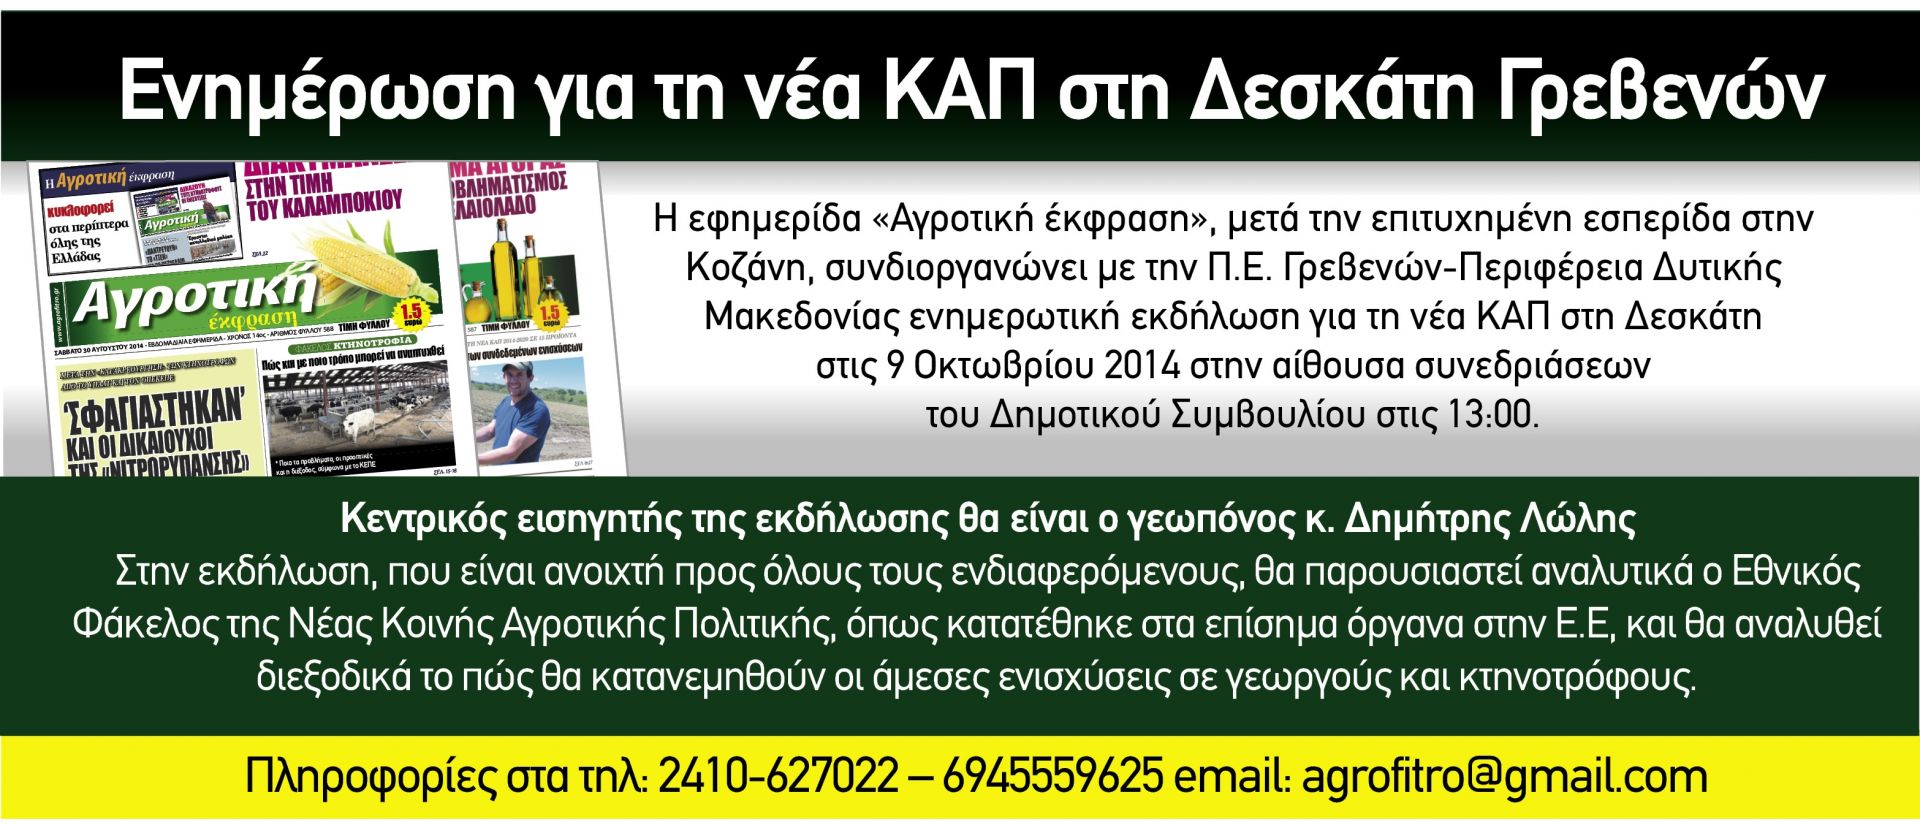 H Περιφέρεια Δυτικής Μακεδονίας συνδιοργανώνει με την εφημερίδα «Αγροτική έκφραση» ενημερωτική εκδήλωση για τη νέα ΚΑΠ στη Δεσκάτη